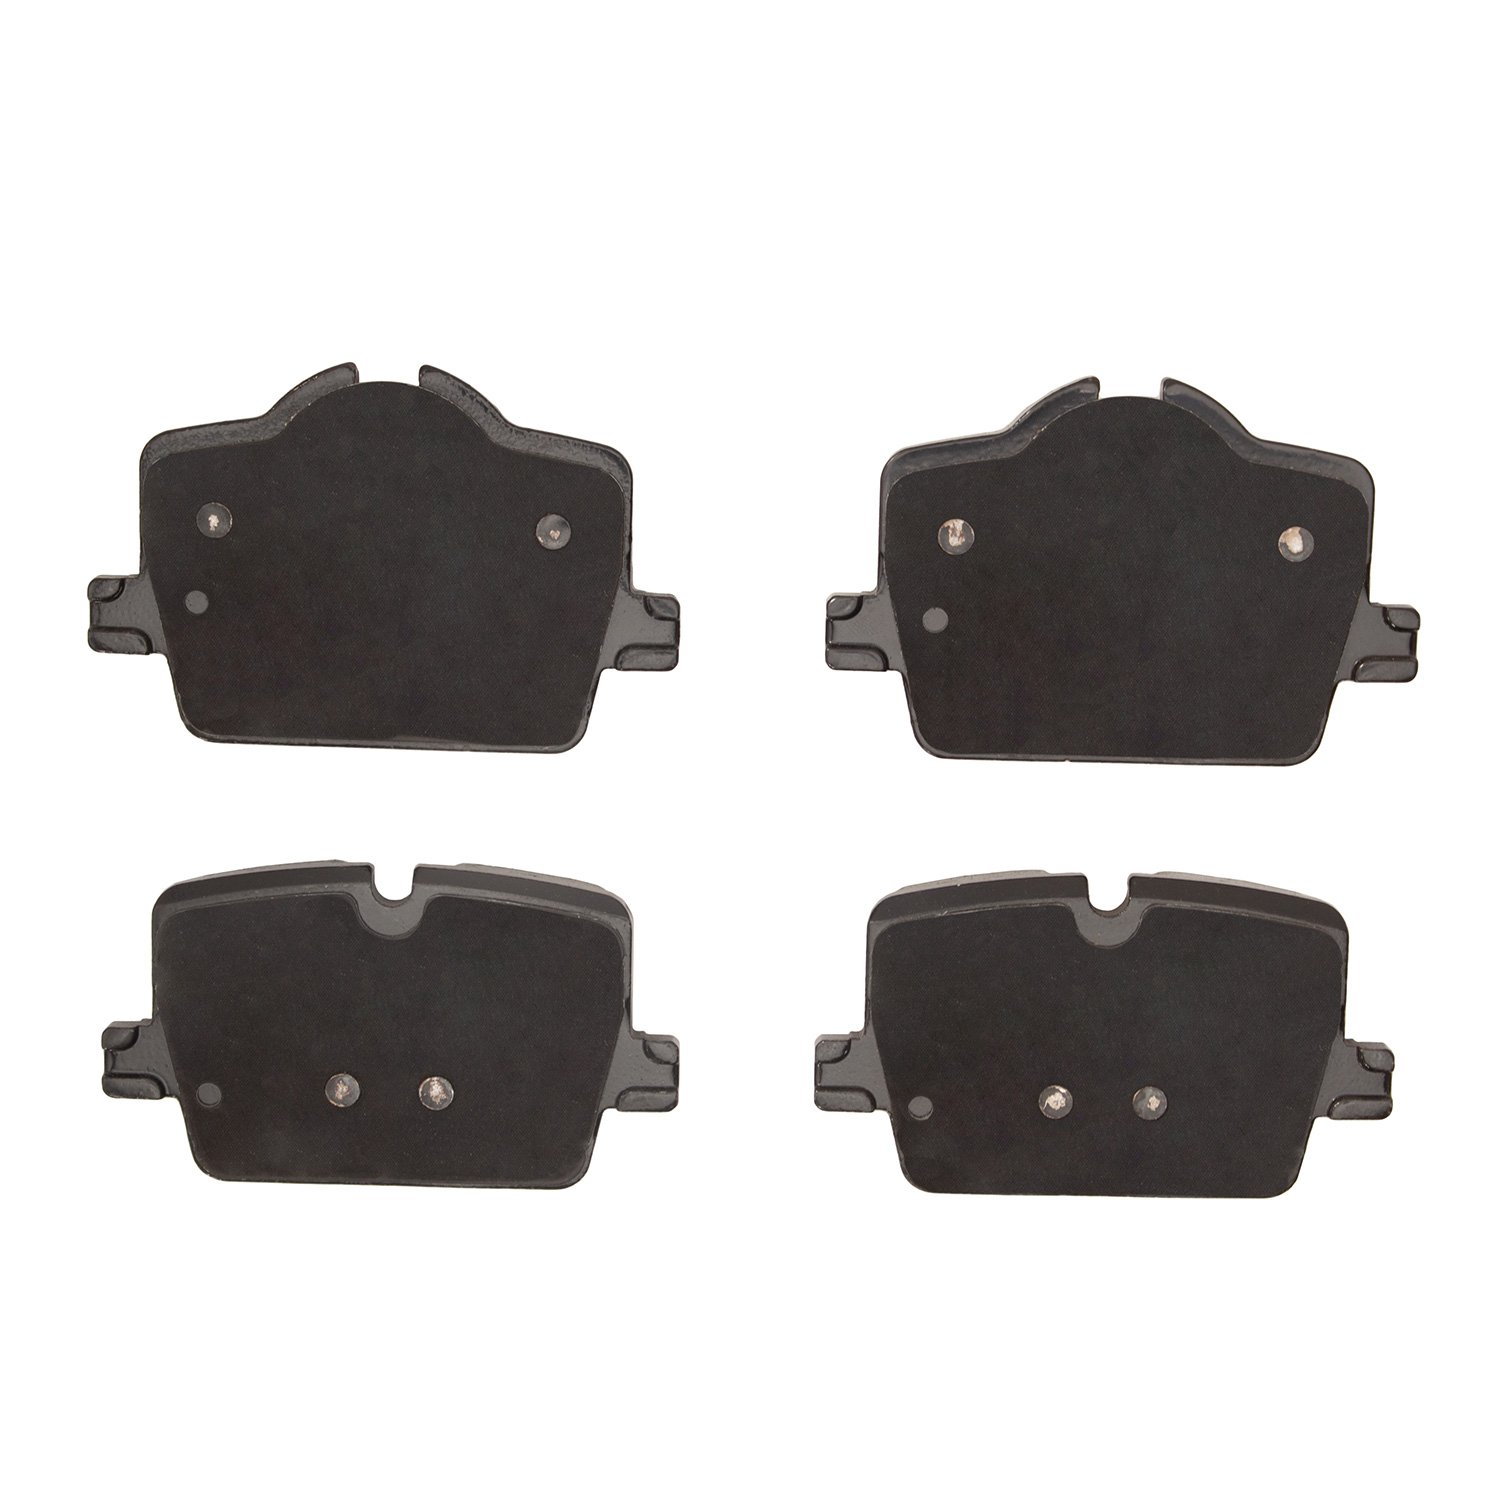 1551-2221-00 5000 Advanced Ceramic Brake Pads, Fits Select Multiple Makes/Models, Position: Rear